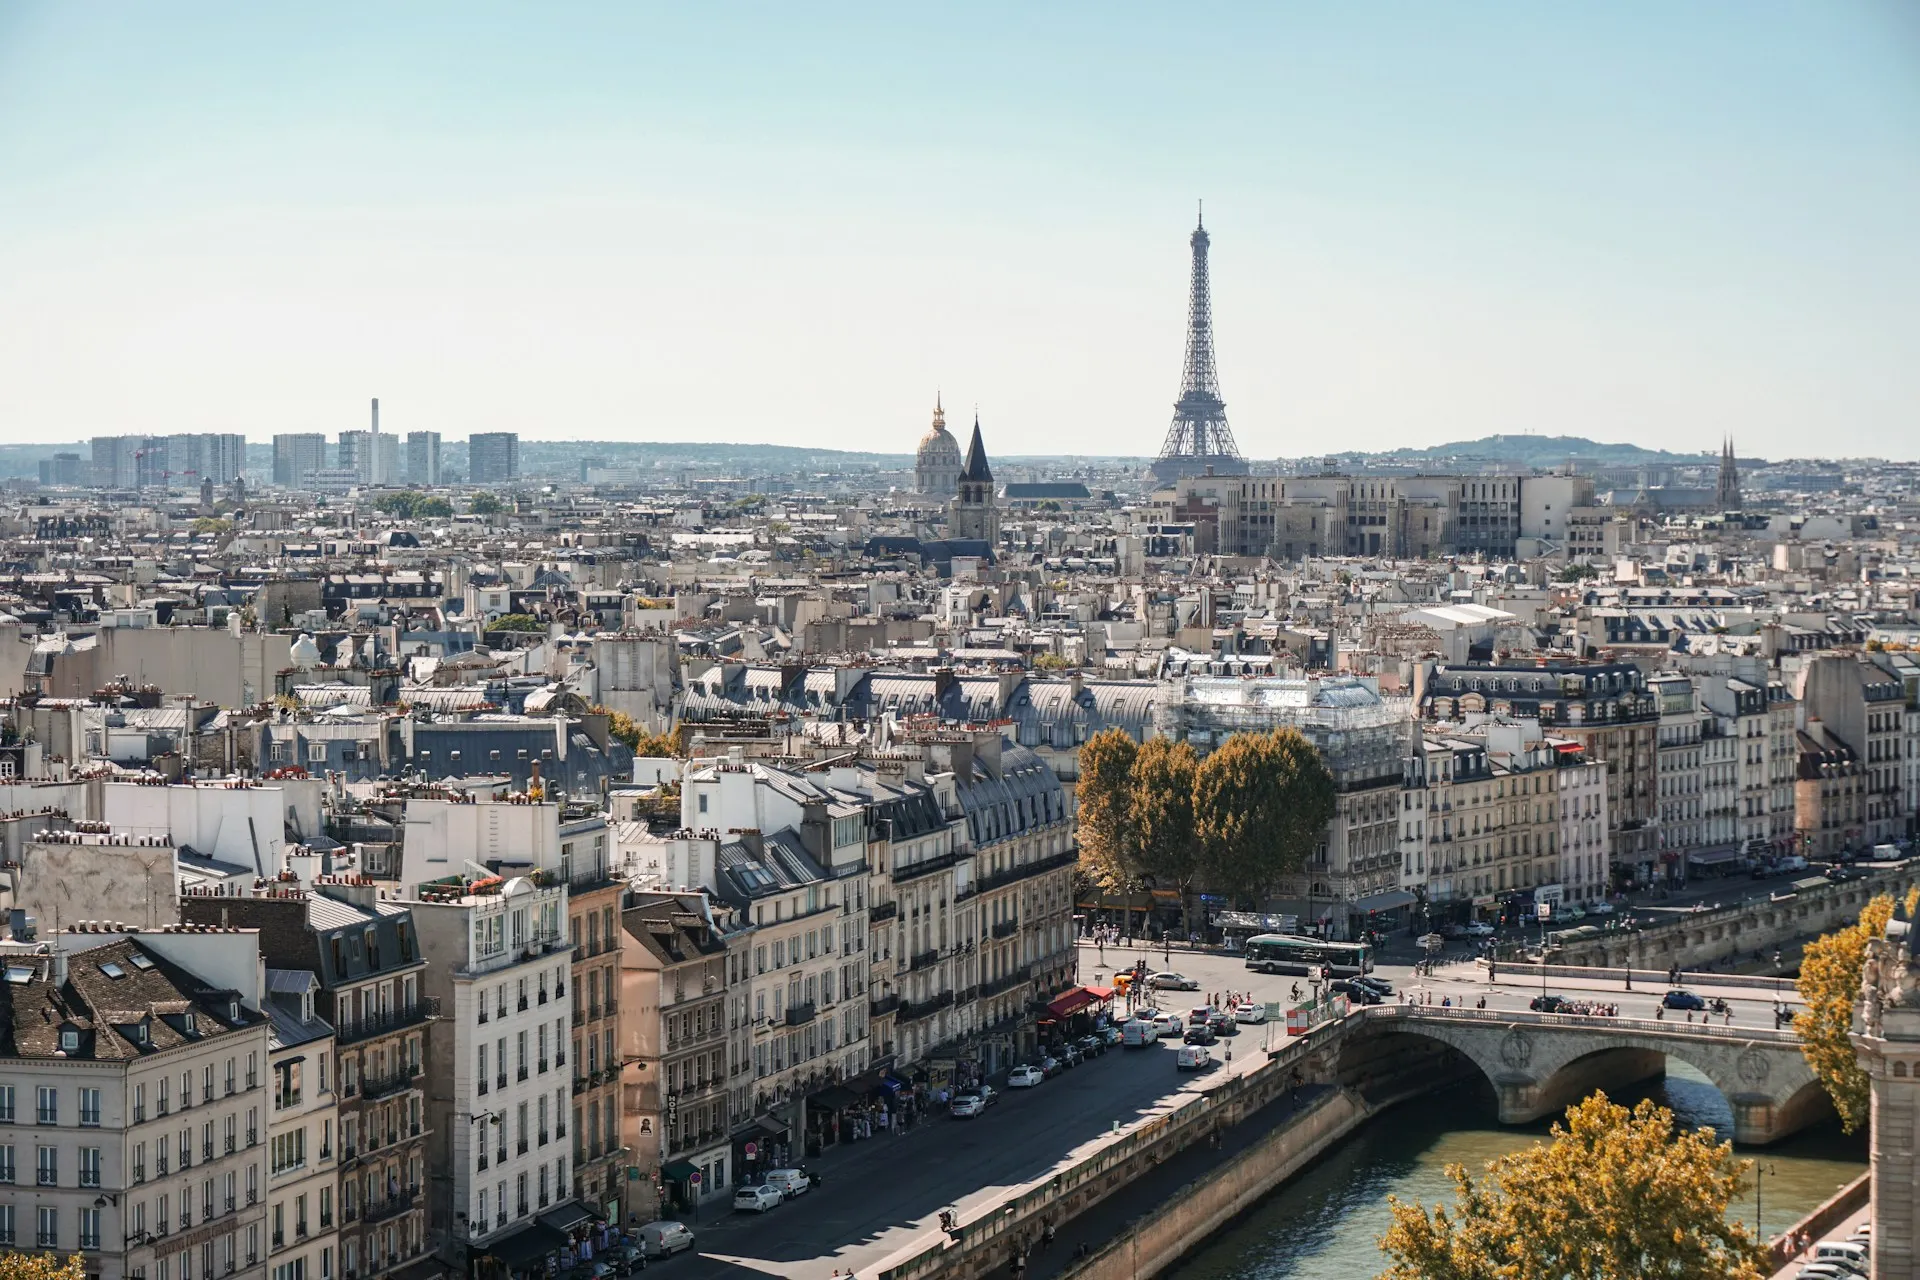 Cityscape of Paris. Source: Photo by Alexander Kagan on Unsplash